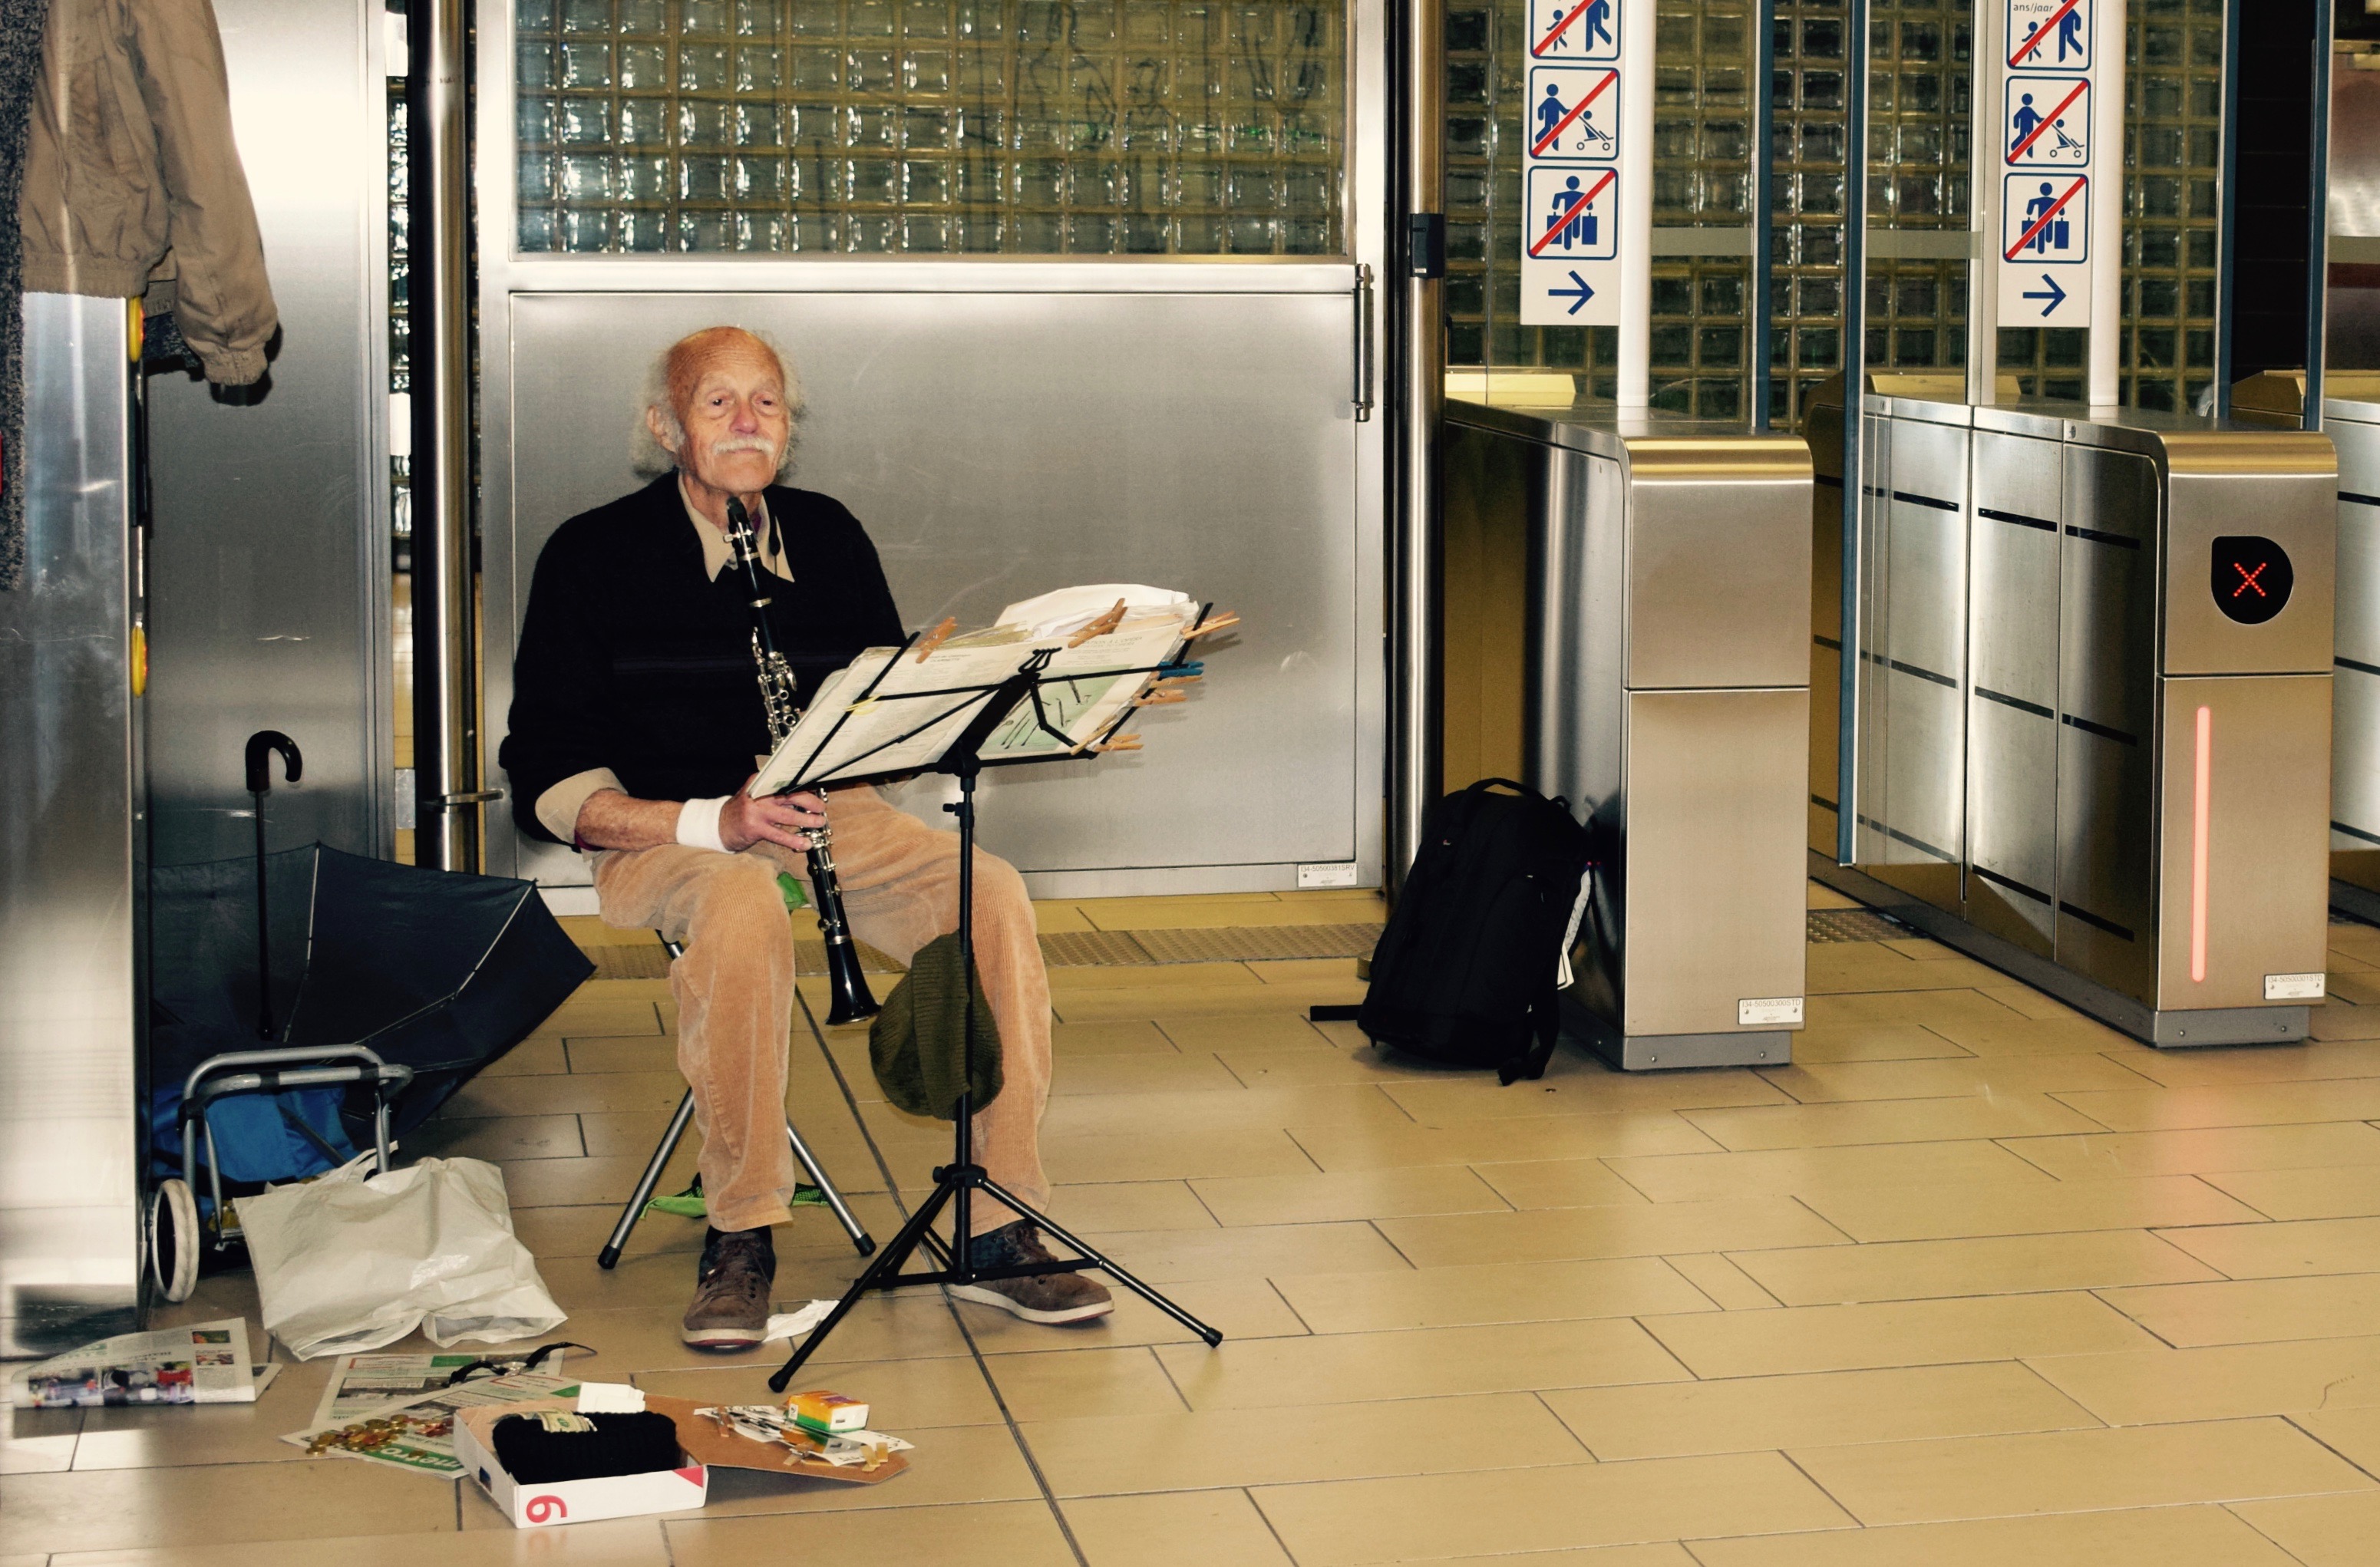 Argentine clarinetist Abraham Kunik at the Maelbeek metro station